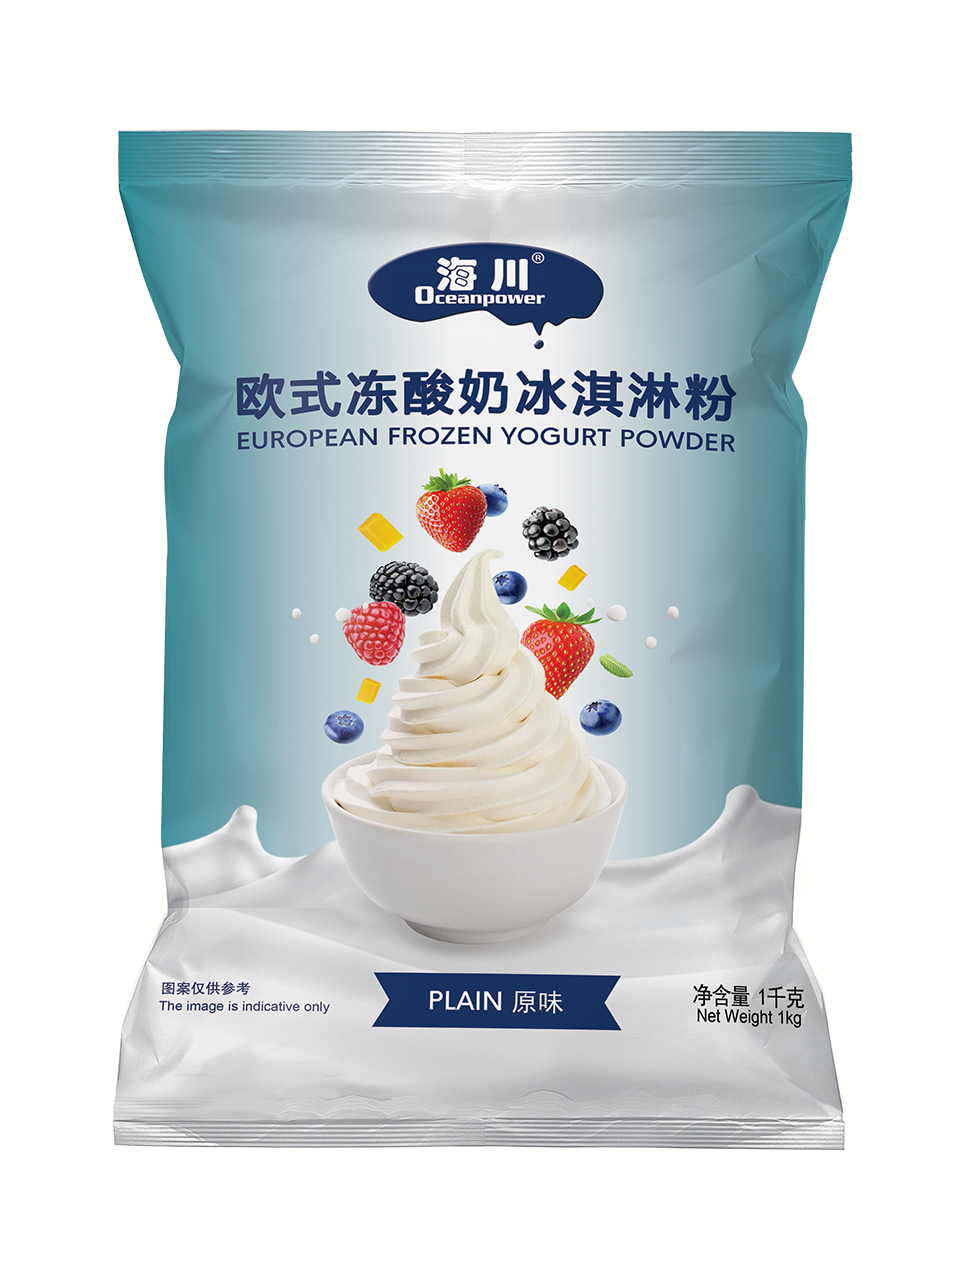 Traktat couscous sig selv 2018 New Frozen Yogurt Powder